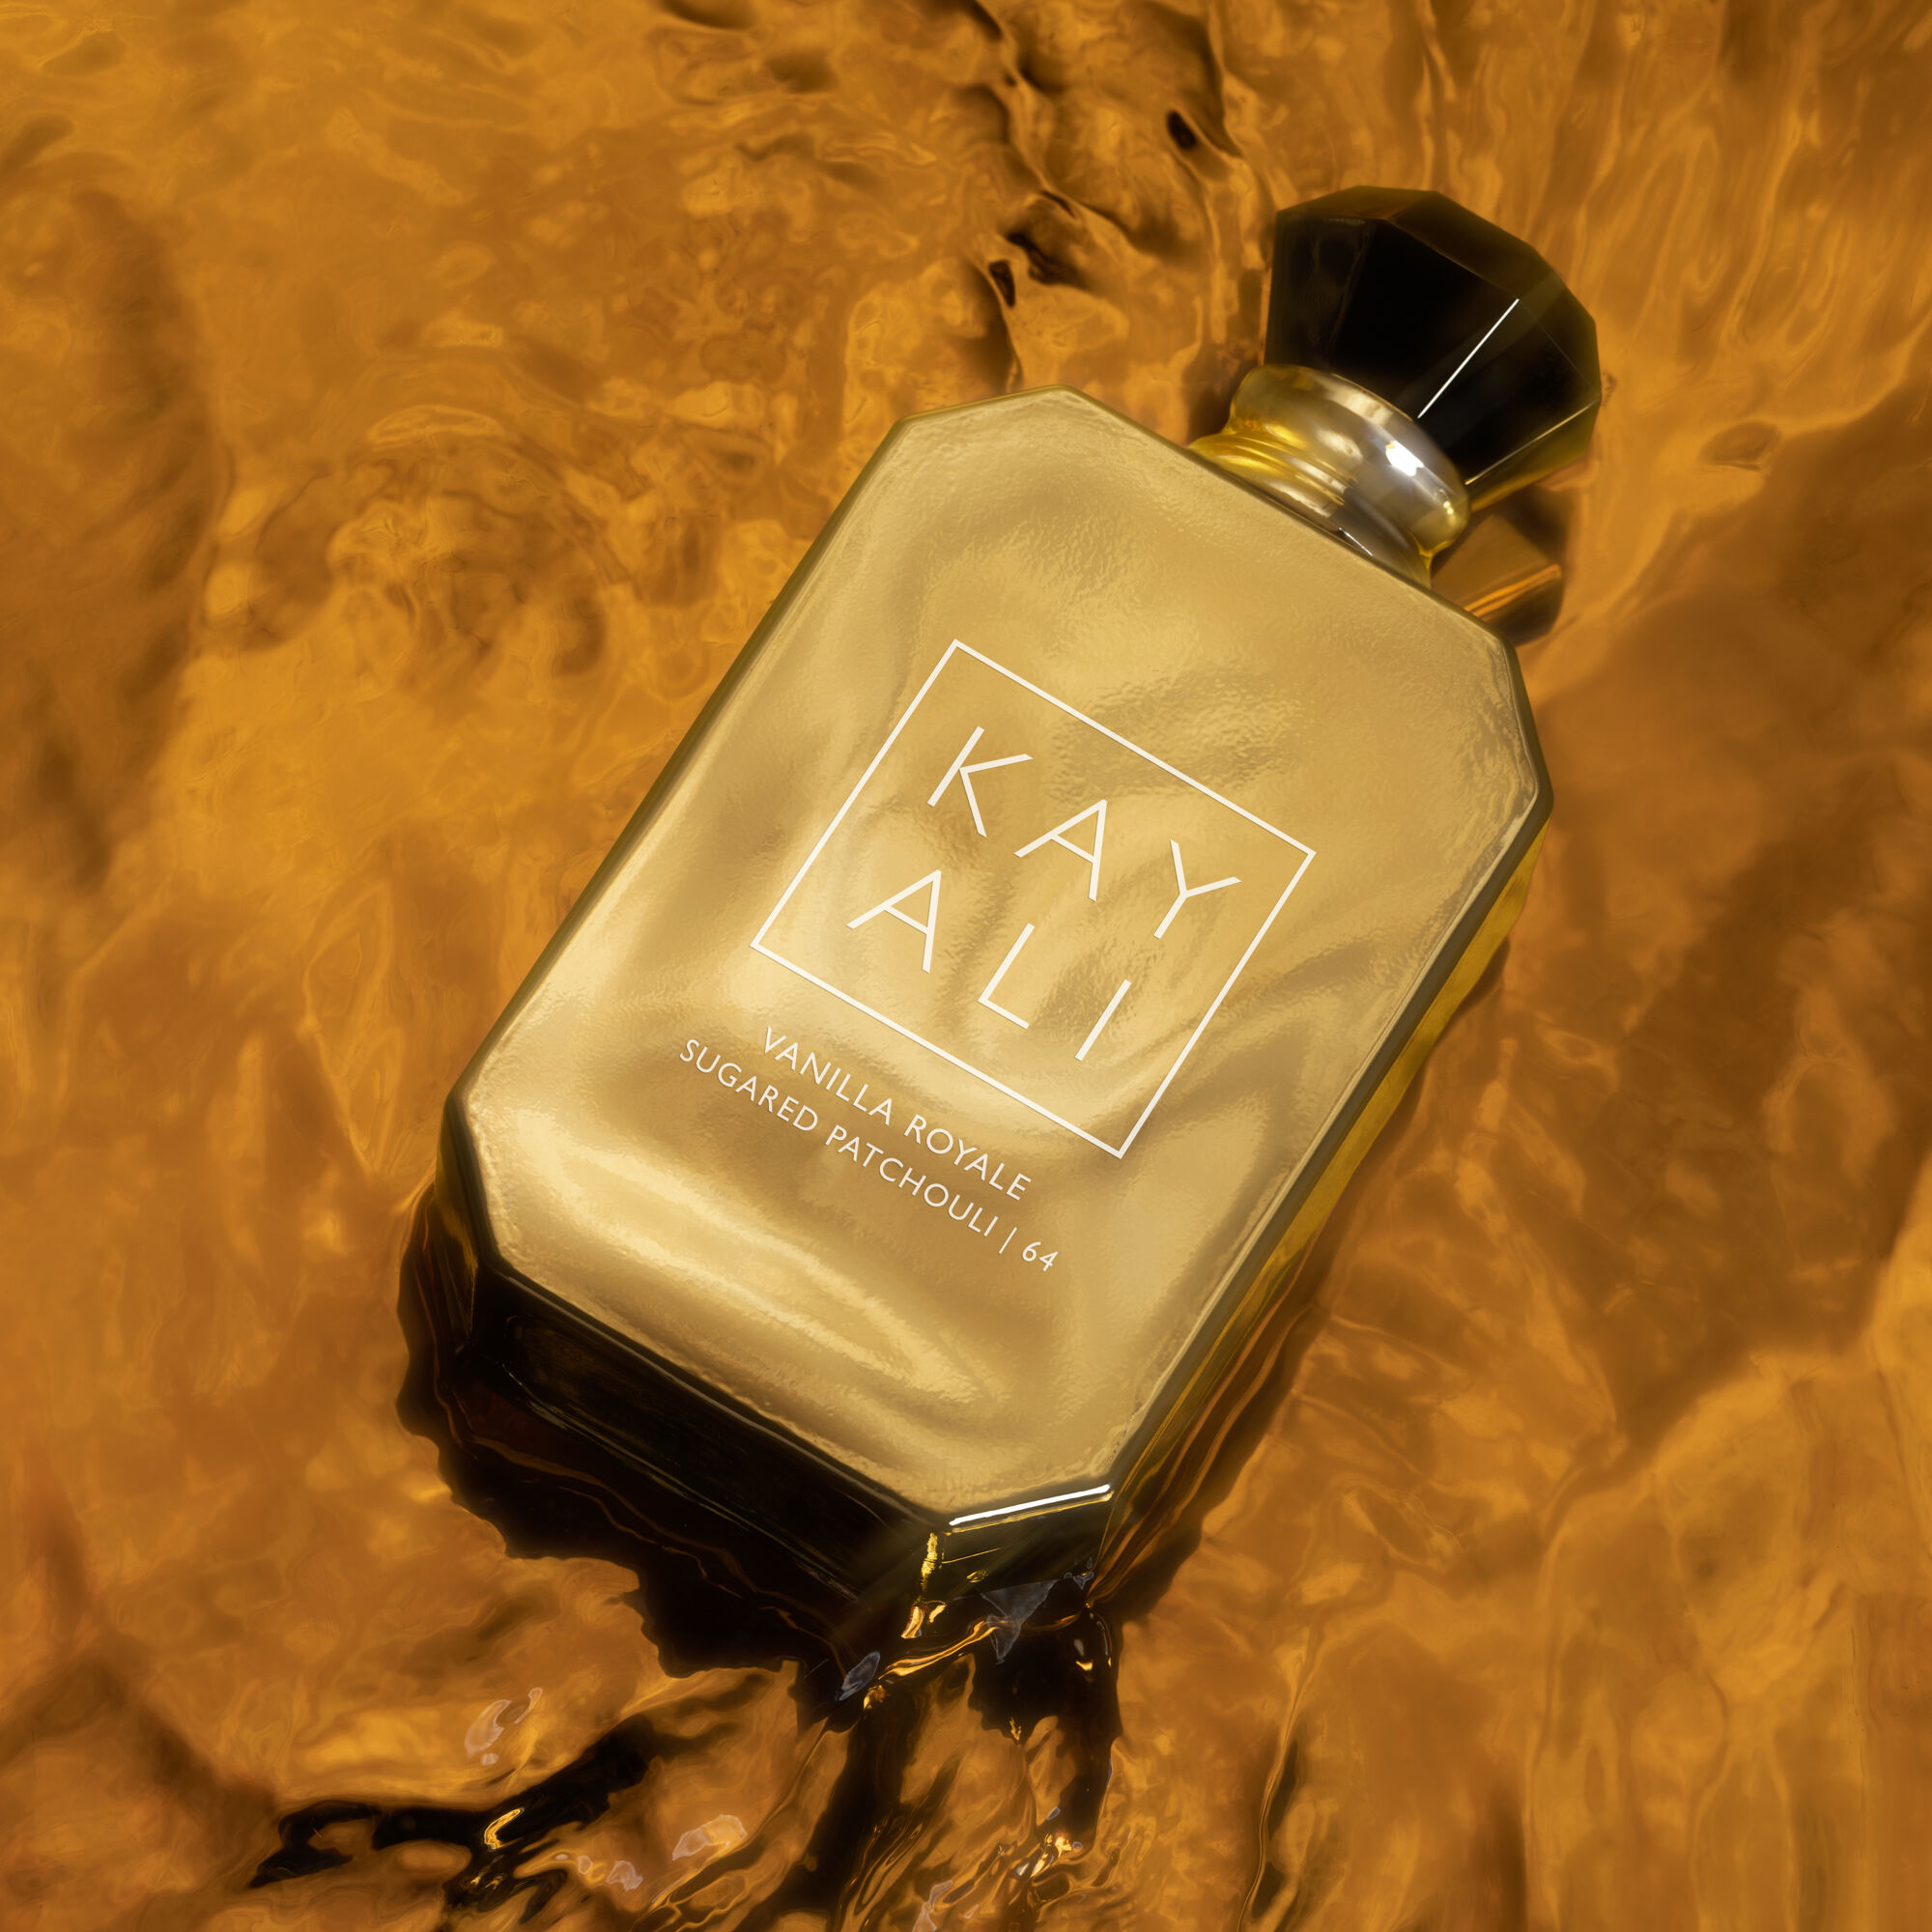 Kayali Perfume | HUDA BEAUTY